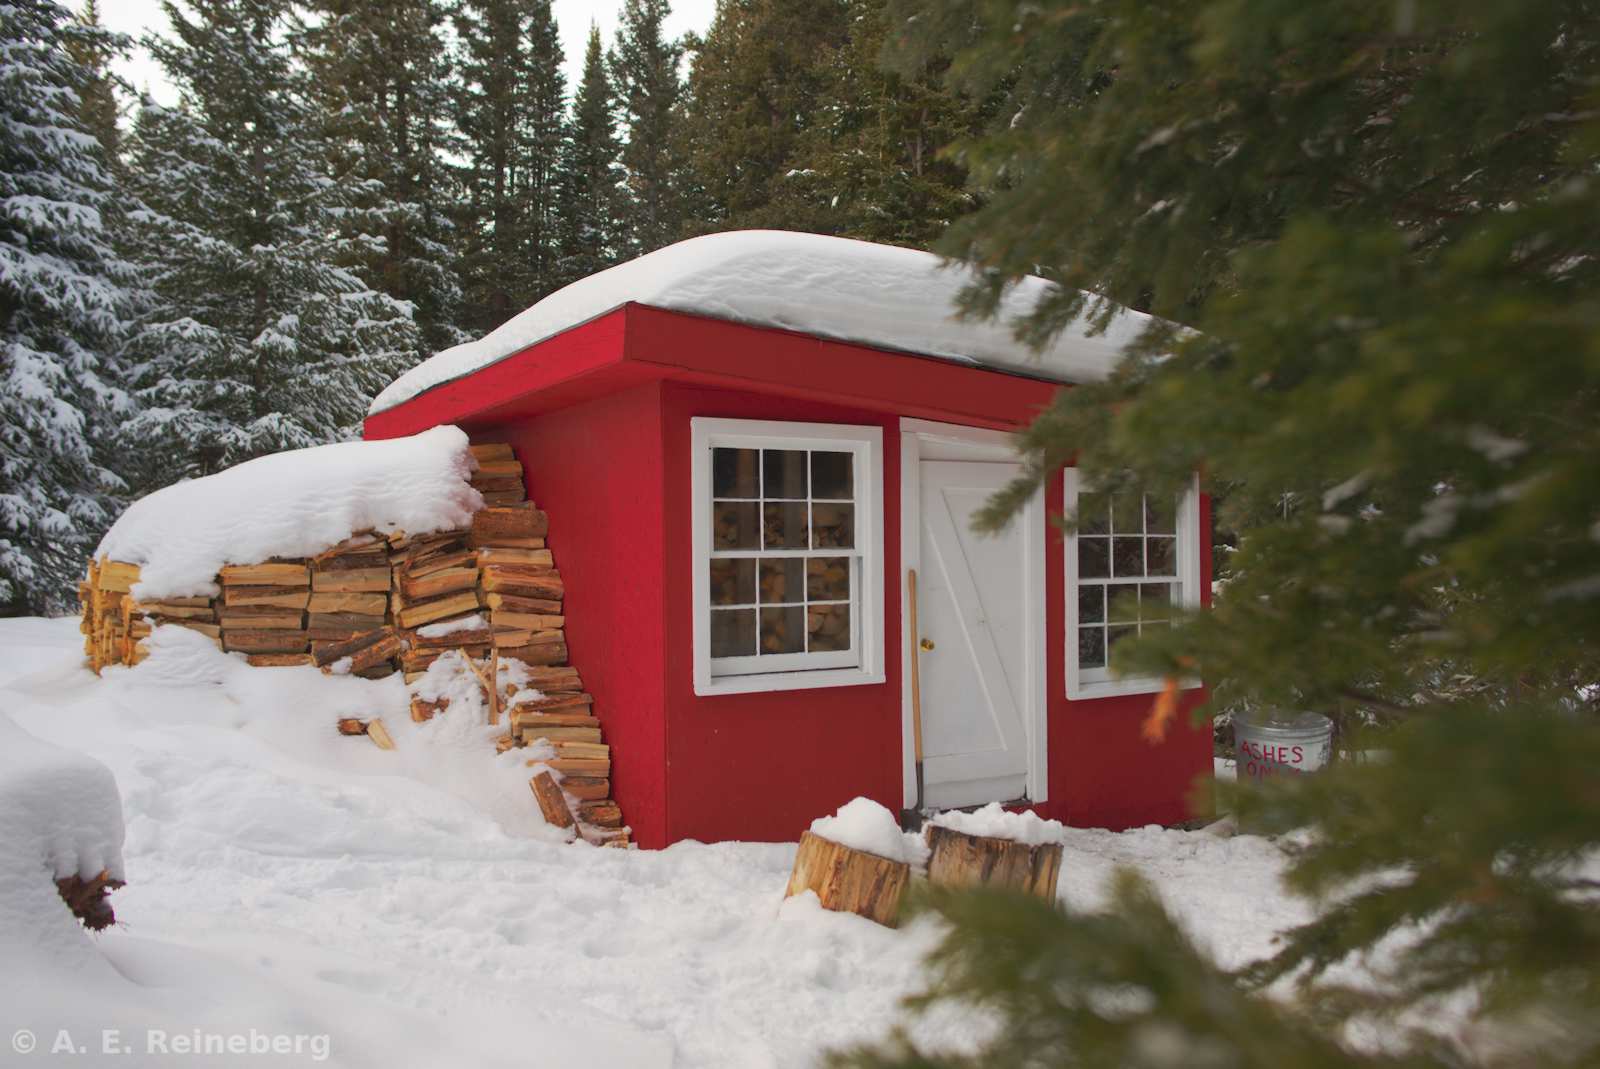 A winter trip to Chuck's Cabin